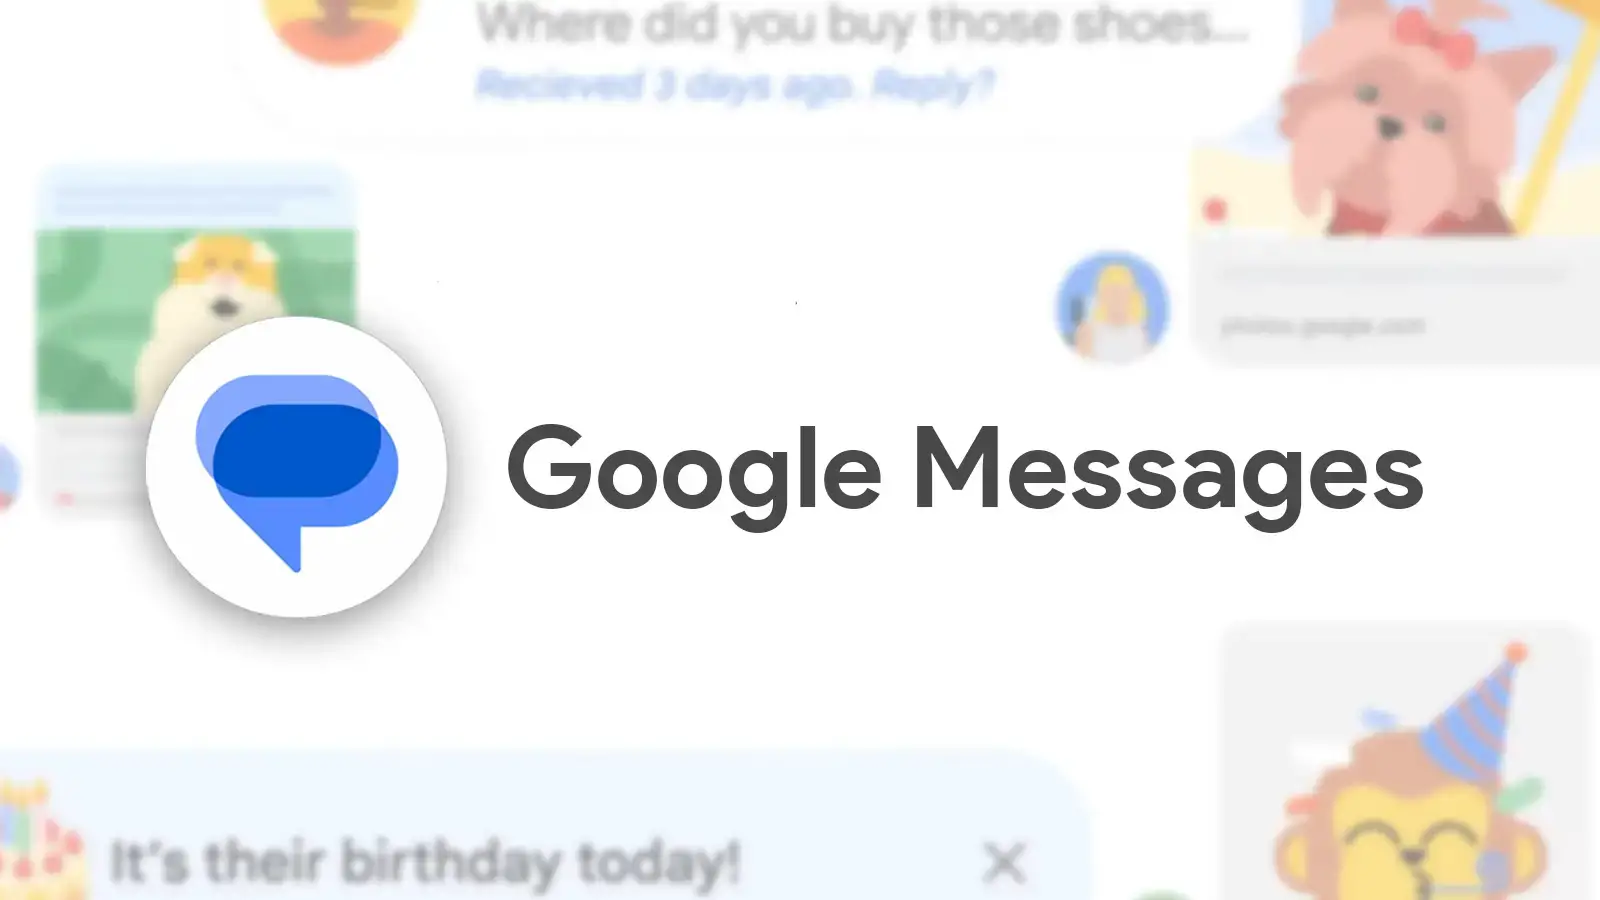 Google Messages Bard